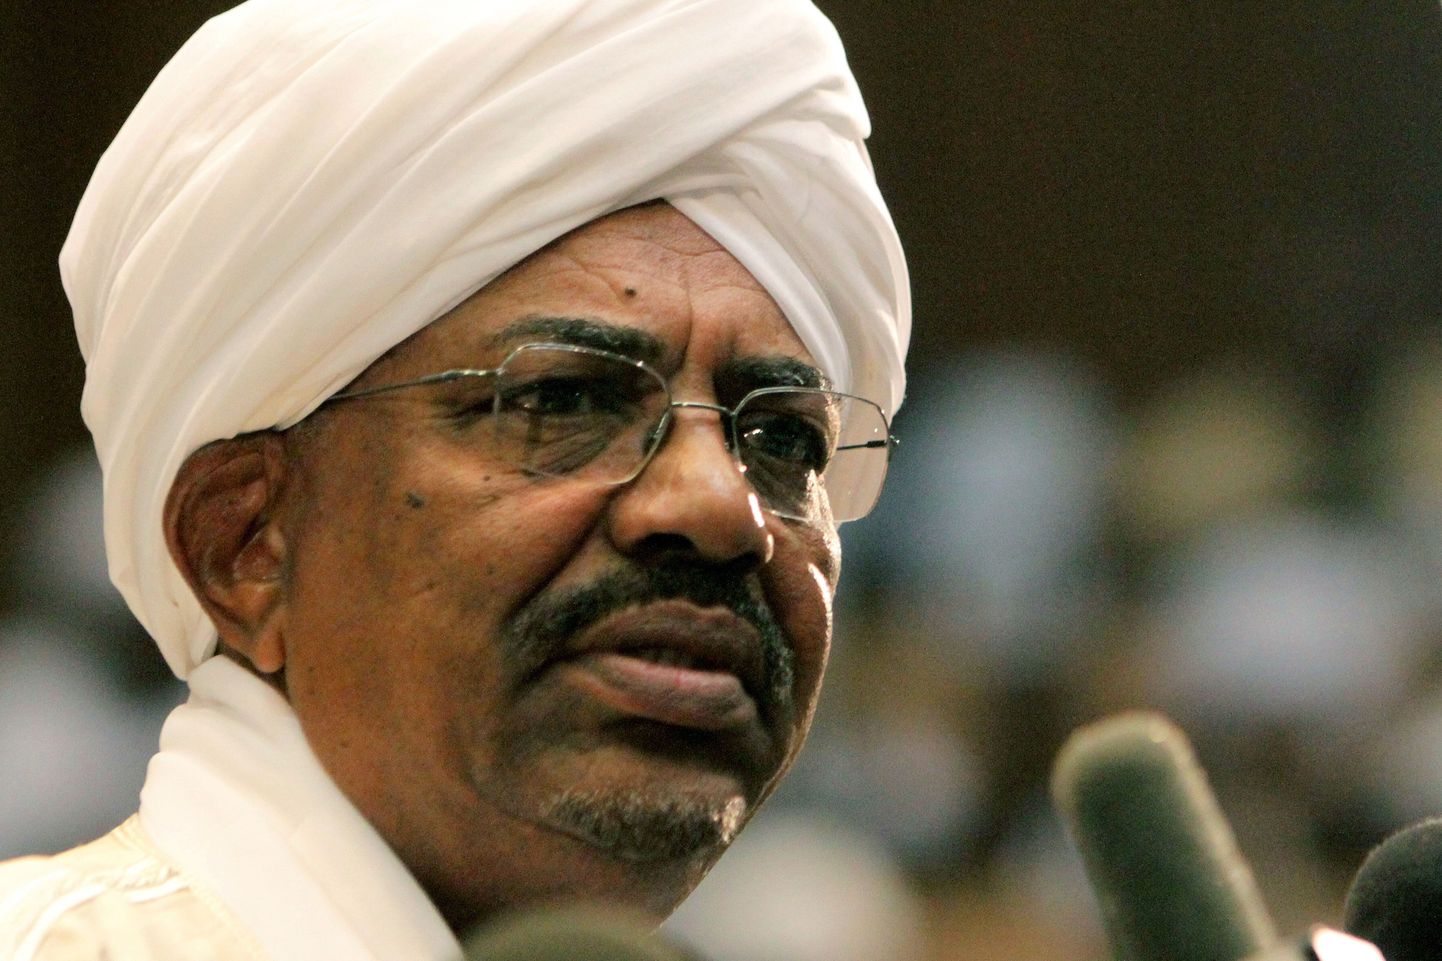 Sudaani president Omar al-Bashir